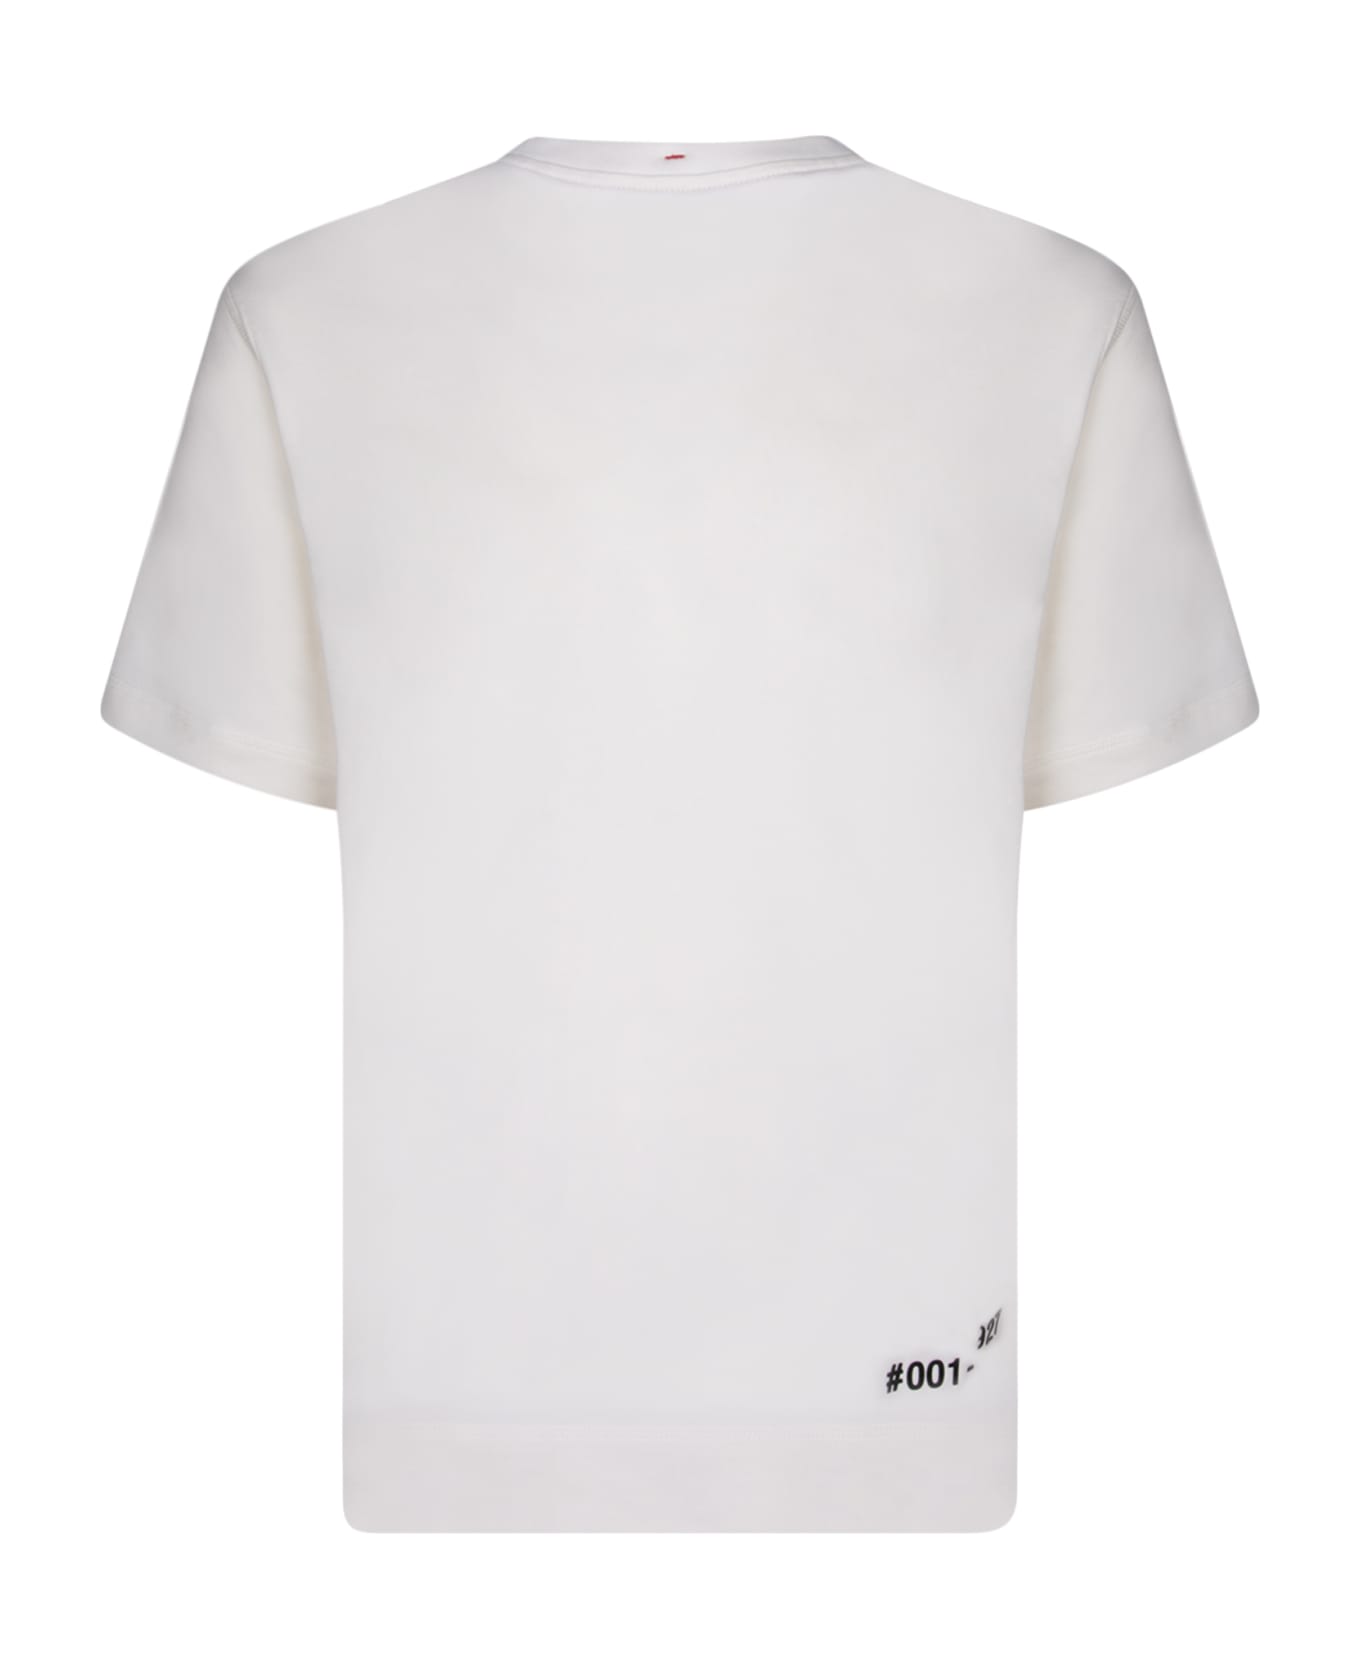 Moncler Grenoble Logo Print T-shirt - 041 シャツ